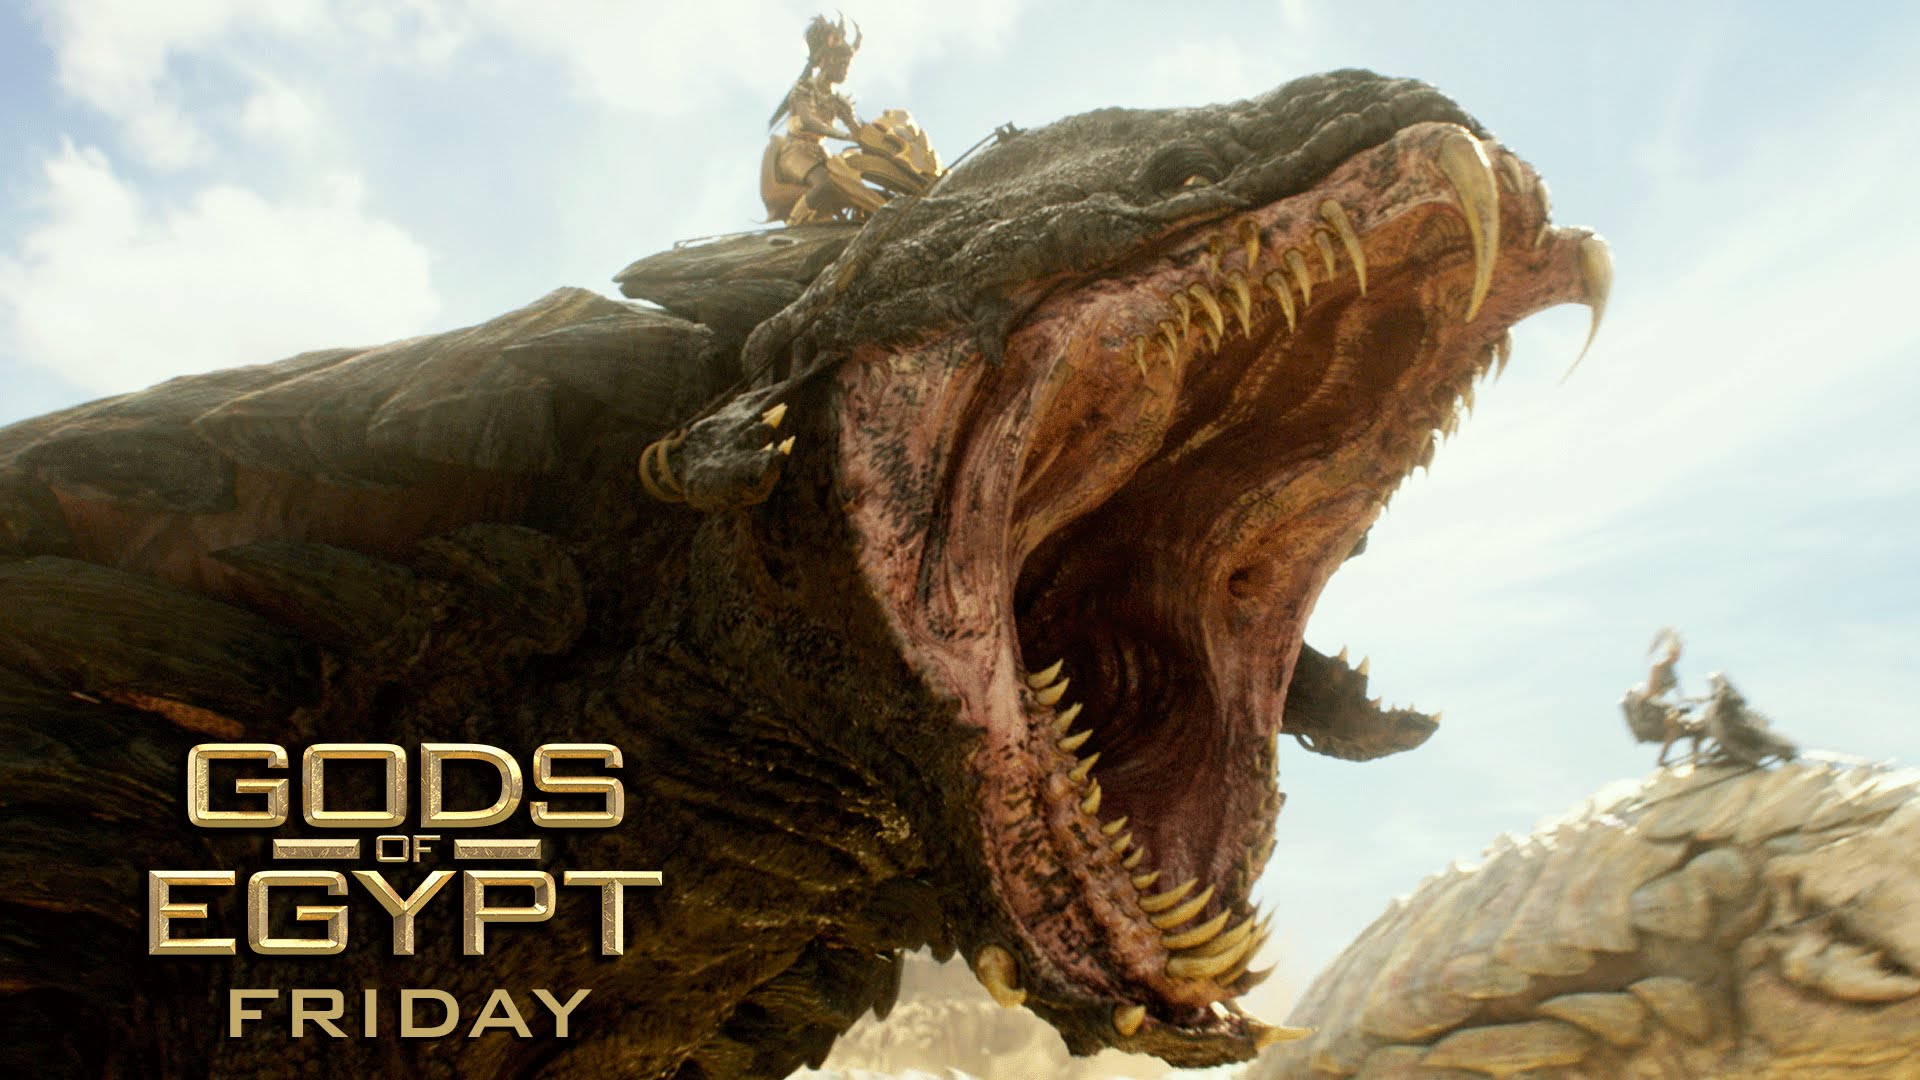 Gods of Egypt (2016 Movie - Gerard Butler) Official TV Spot – “Believe”